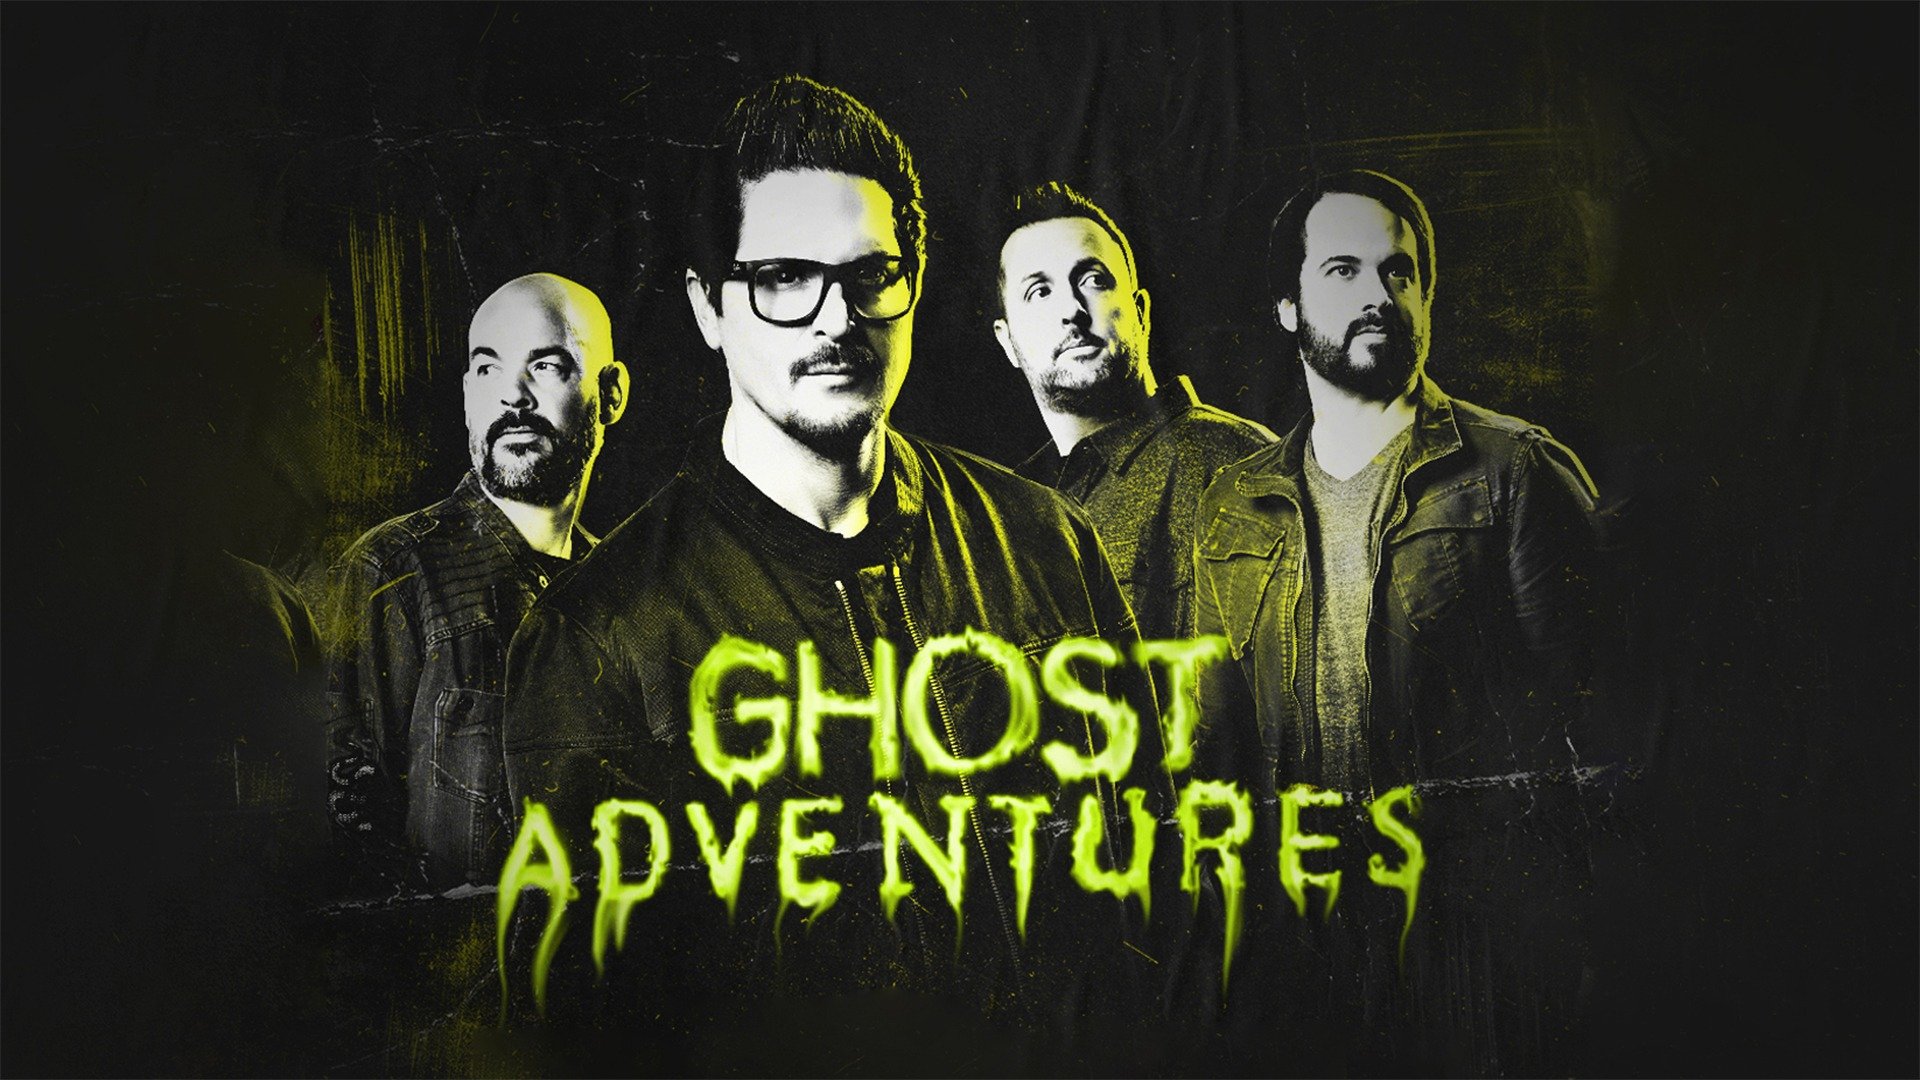 ghost adventures 123movies season 25